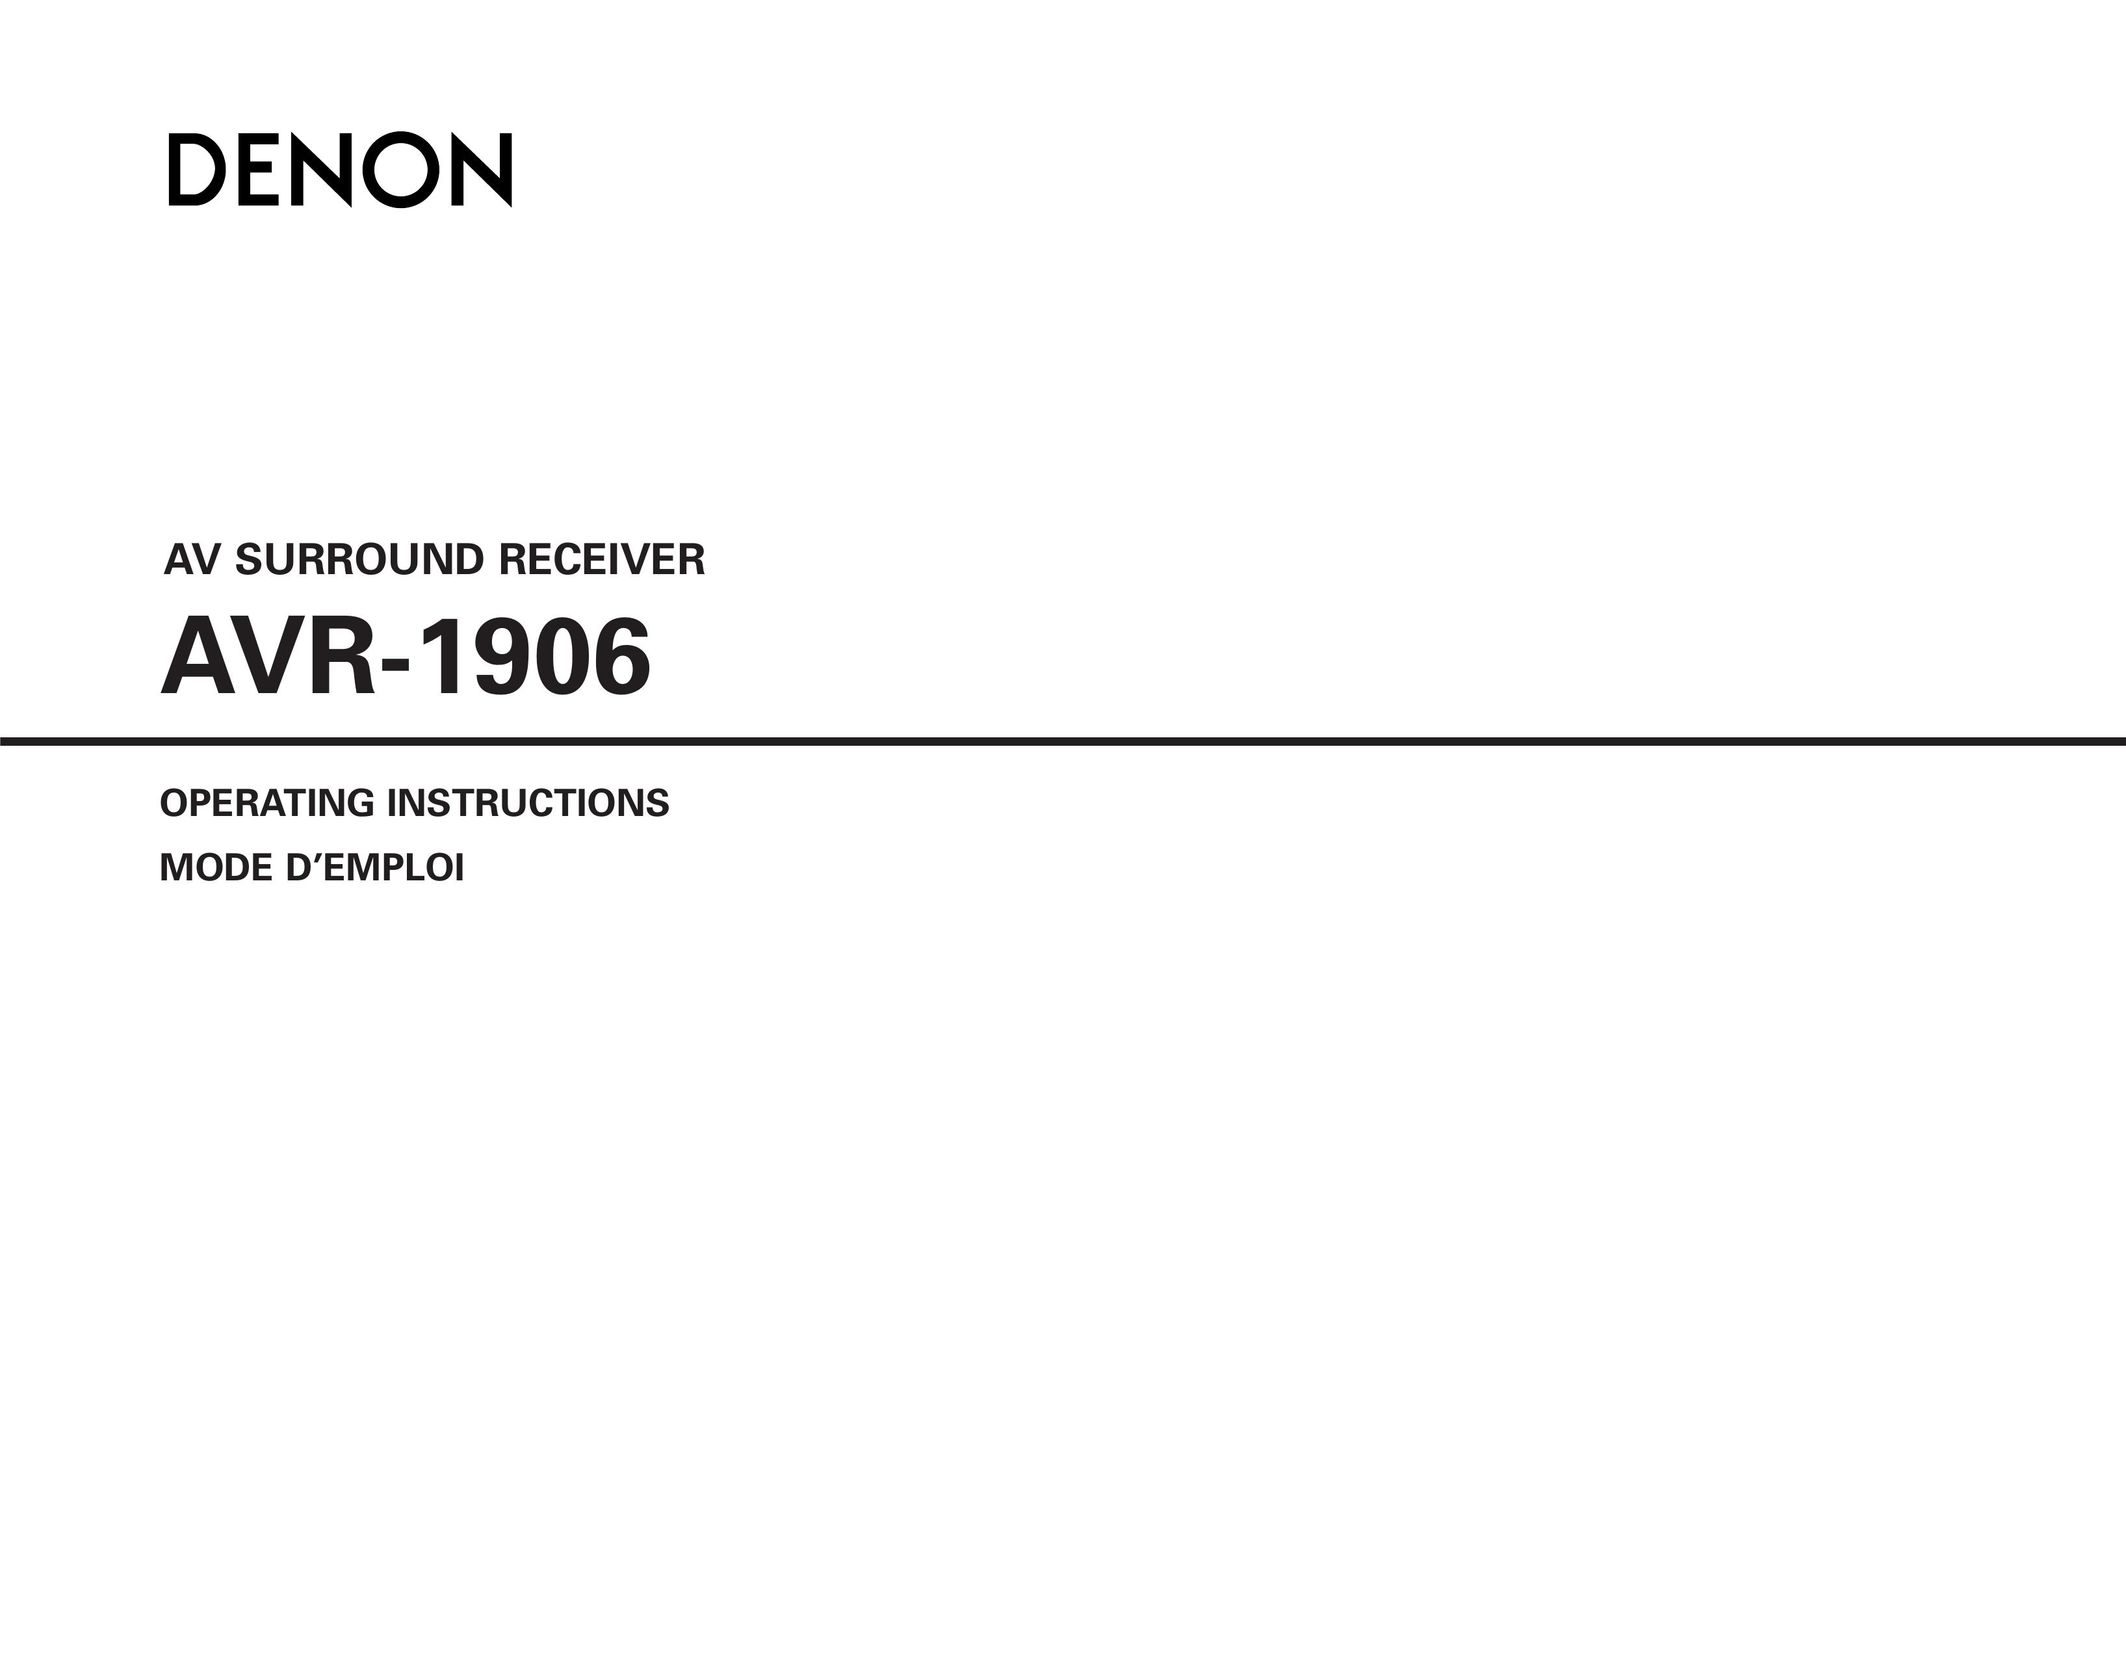 Denon AVR-1906 Stereo Receiver User Manual